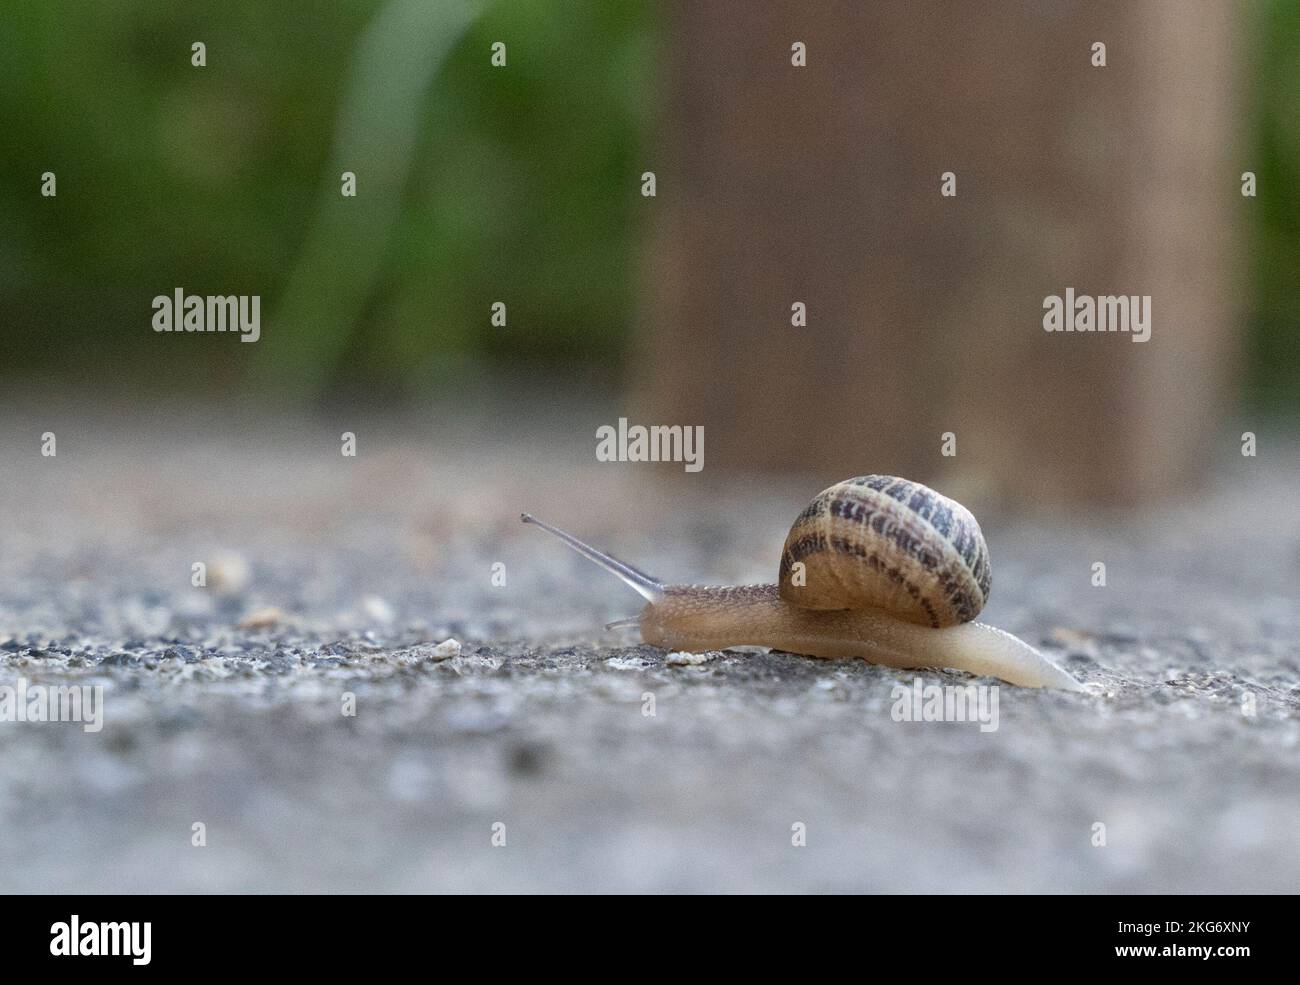 Lento movimiento lento fotografías e imágenes de alta resolución - Alamy